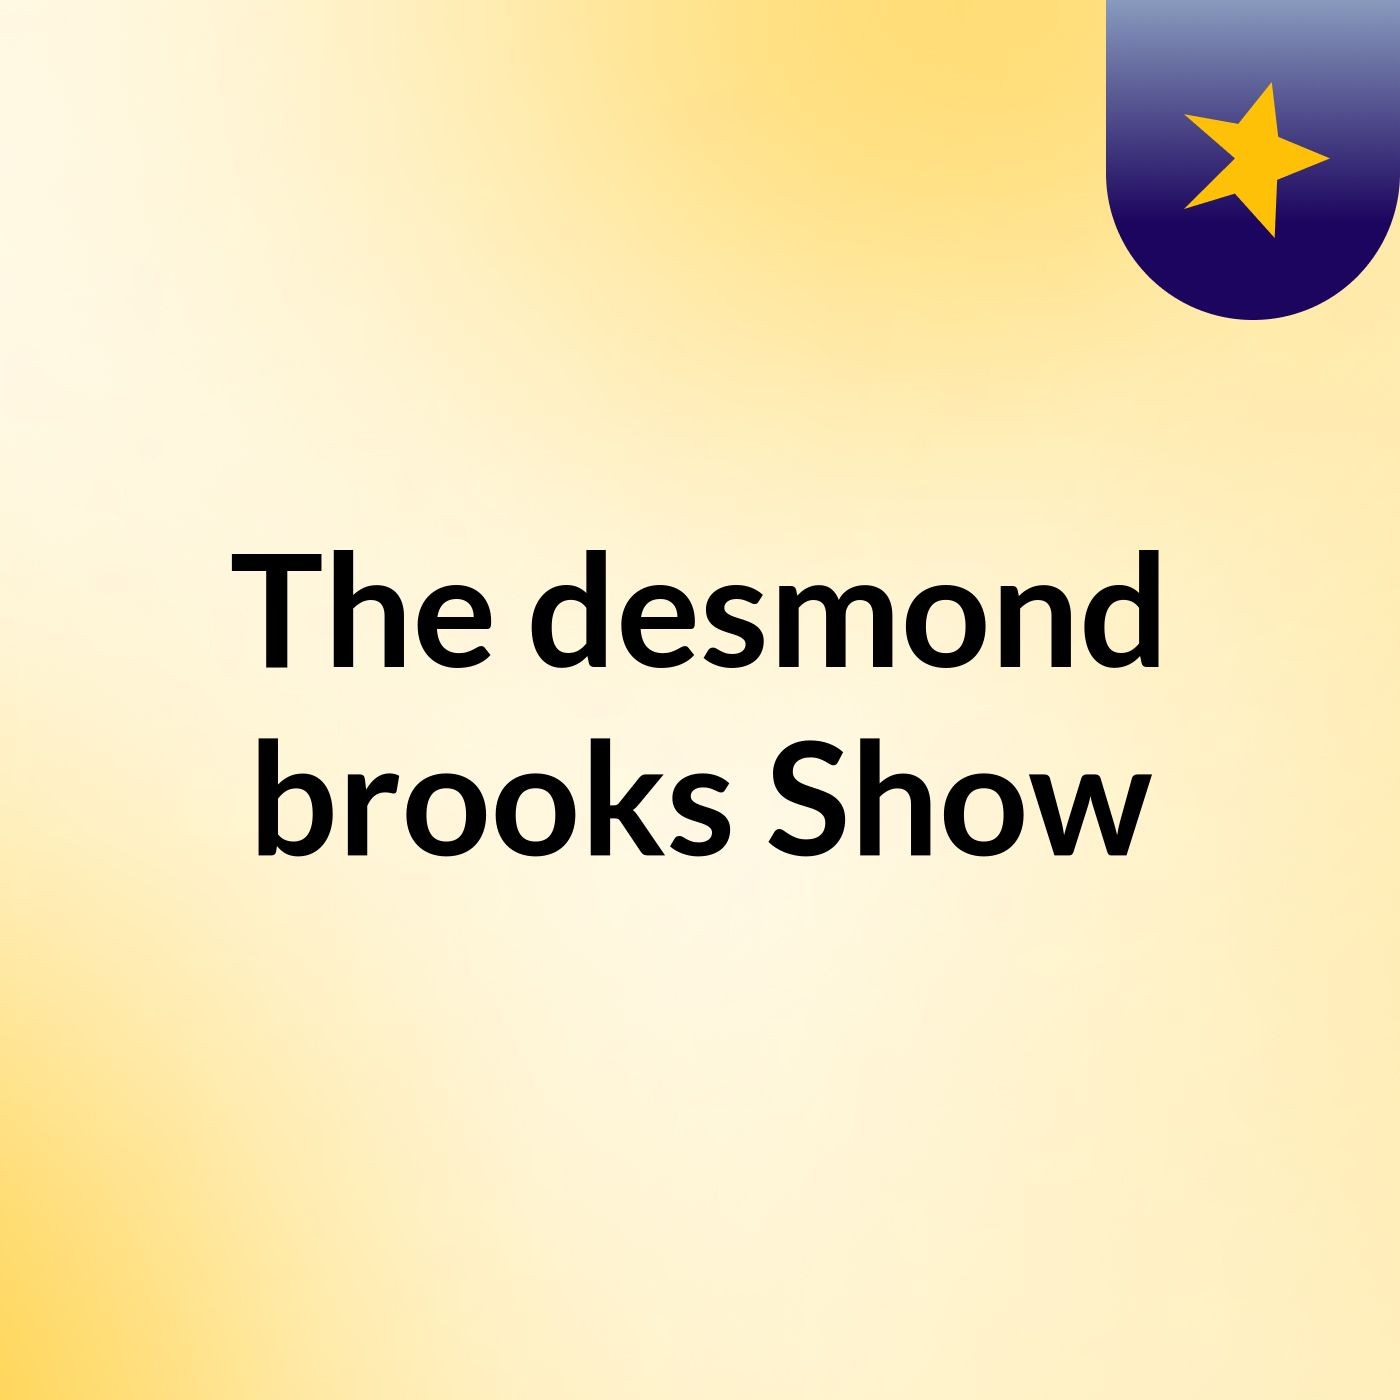 The desmond brooks Show